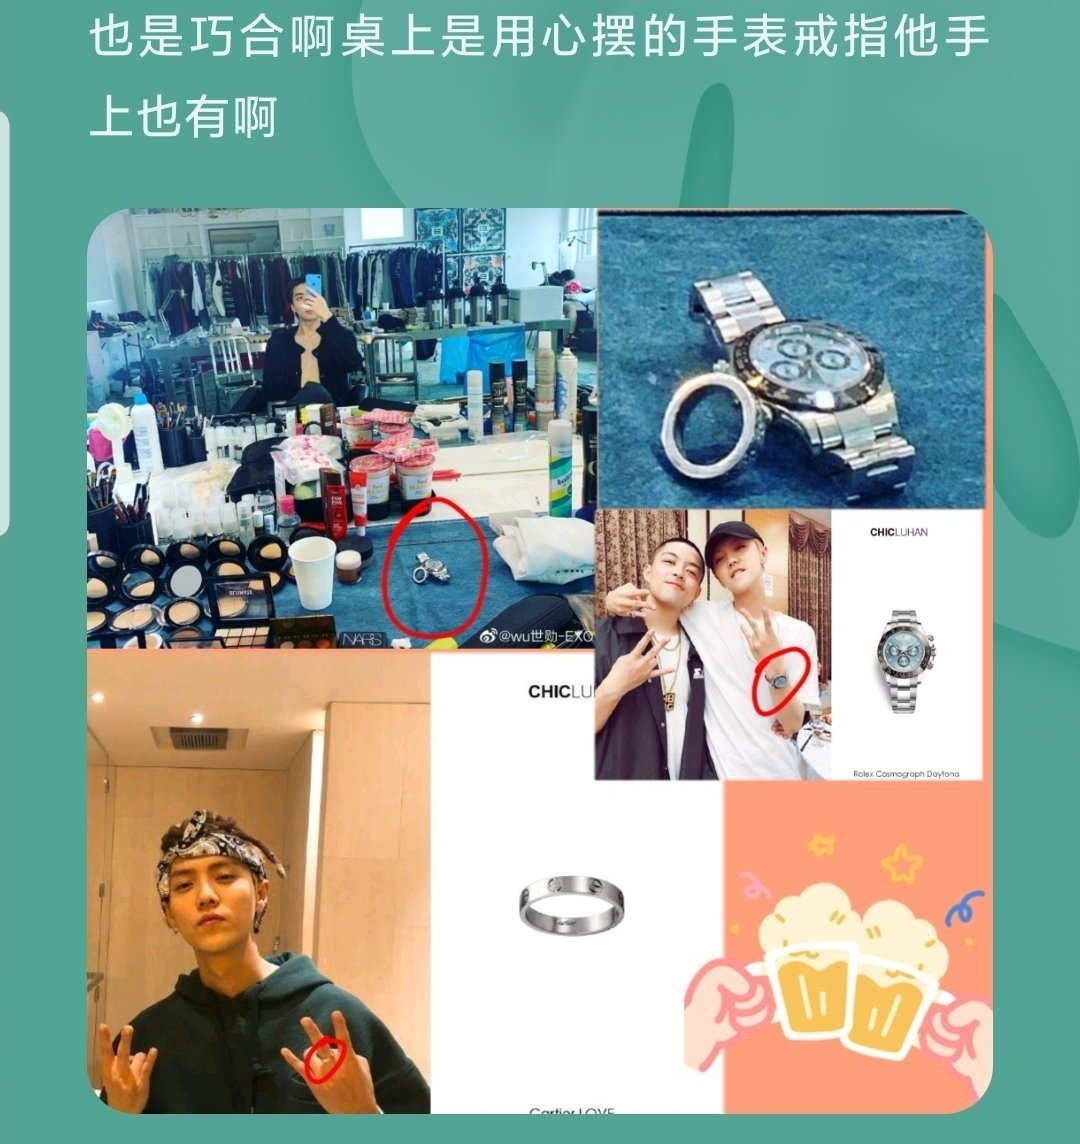 "Itu juga kebetulan, dia juga punya jam tangan dan cincin di atas meja."Postingan weibo sehun ada jam tangan dan cicin itu sama seperti di foto luhan.